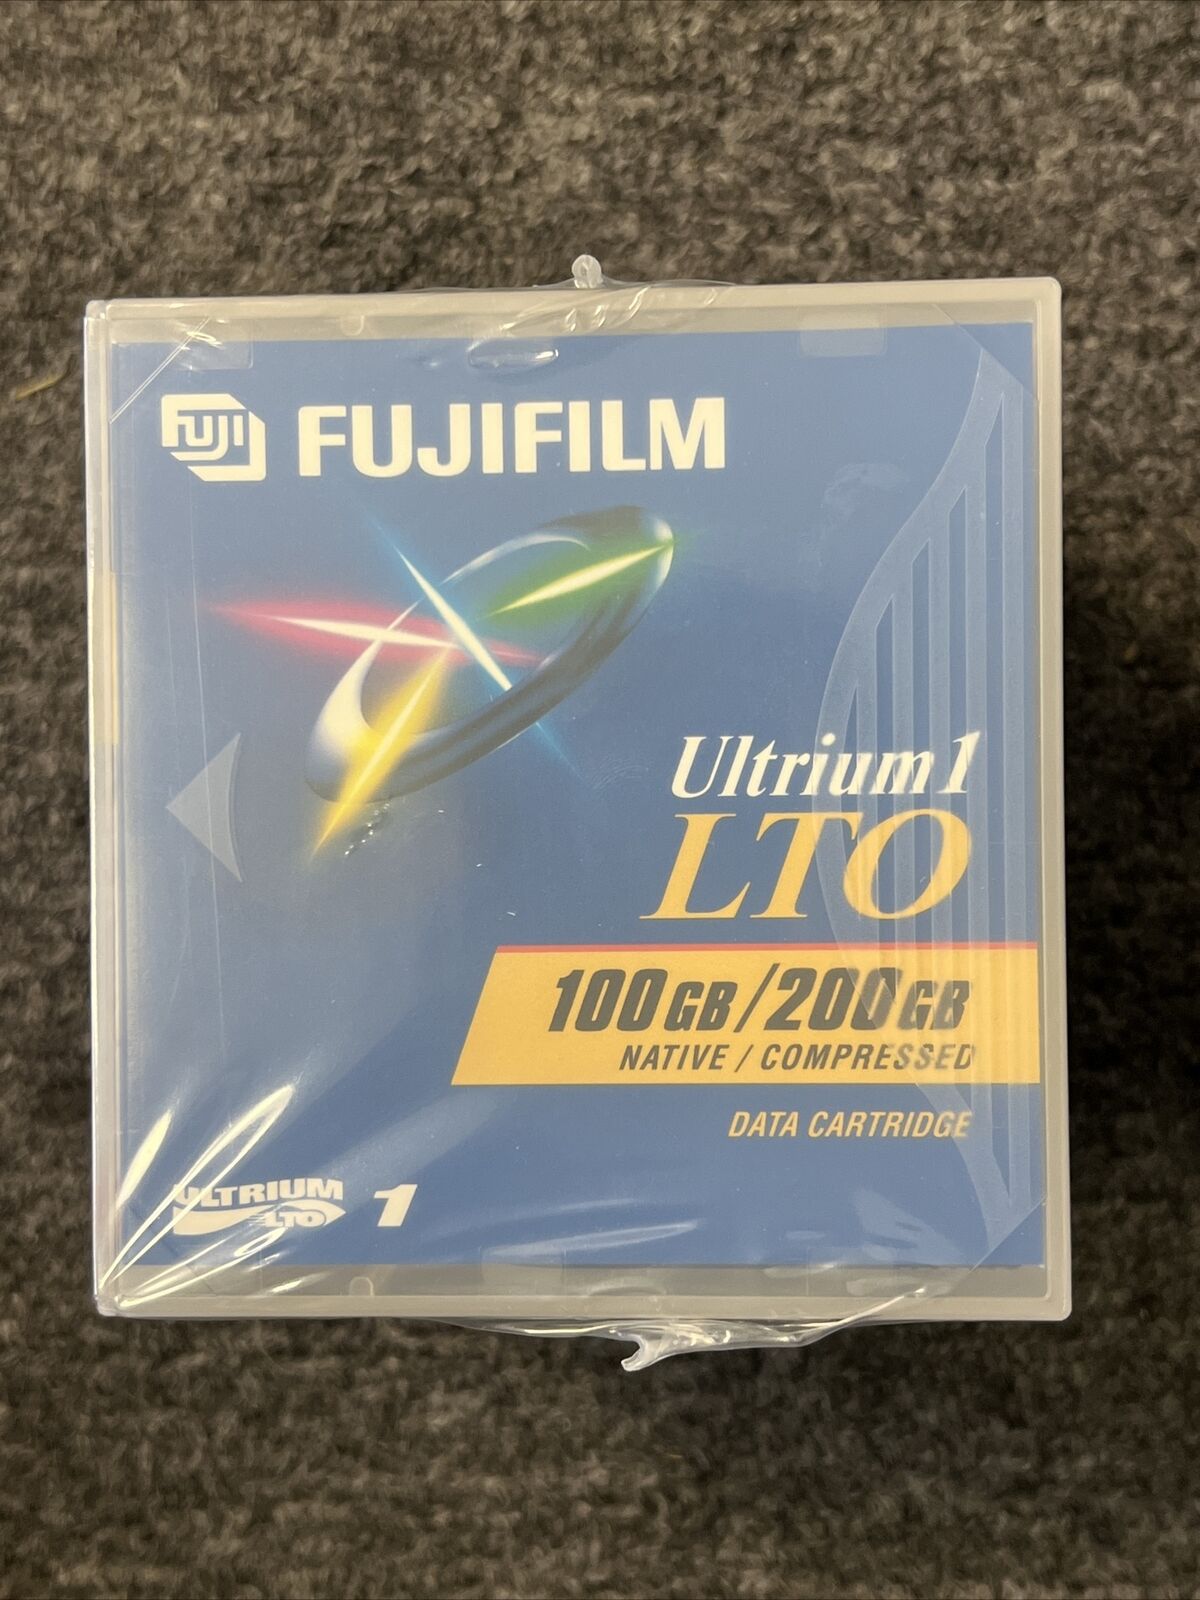 Fujifilm Ultrium 1 LTO 100 GB/200 GB Data Cartridges 5 Pack New Factory Sealed